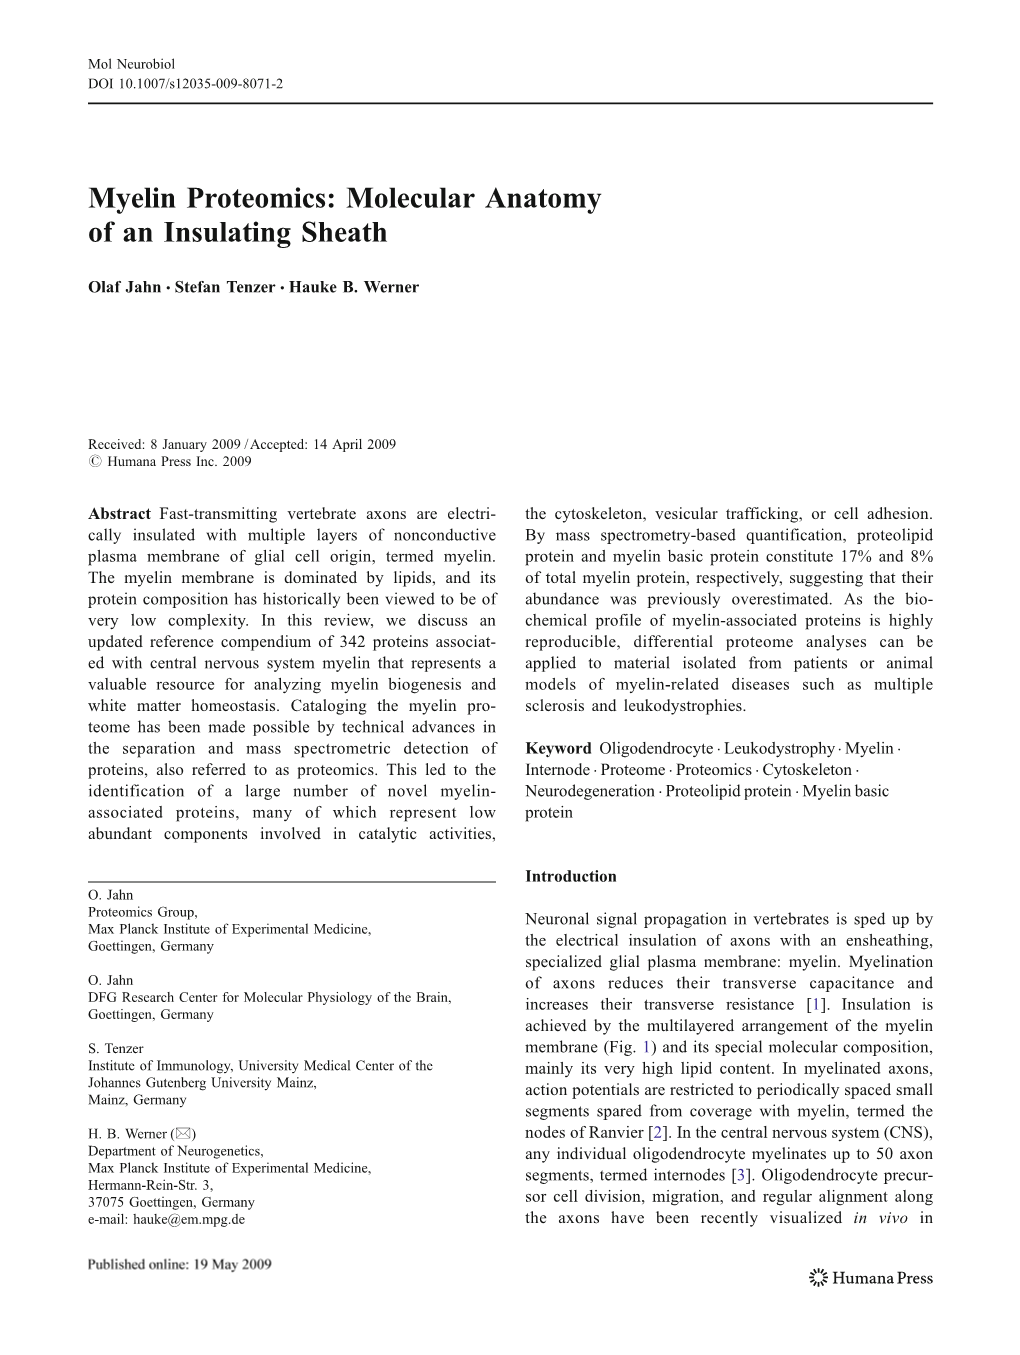 Myelin Proteomics: Molecular Anatomy of an Insulating Sheath